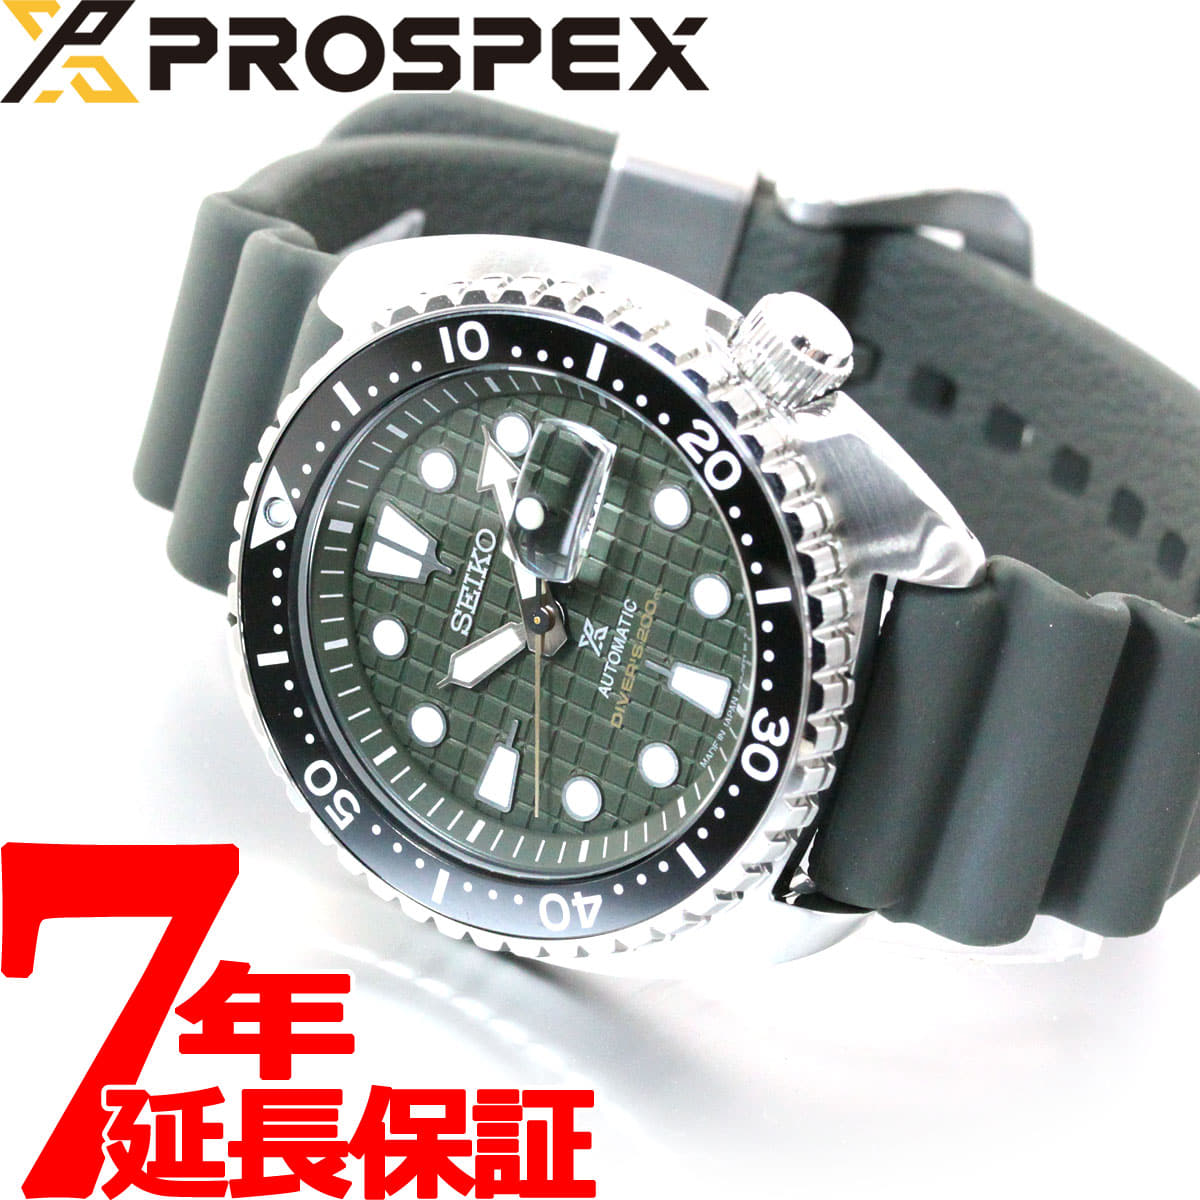 New] SEIKO Pross peck star torr diver scuba SEIKO PROSPEX mechanical  self-winding Watch net Men's Watch SBDY051 - BE FORWARD Store